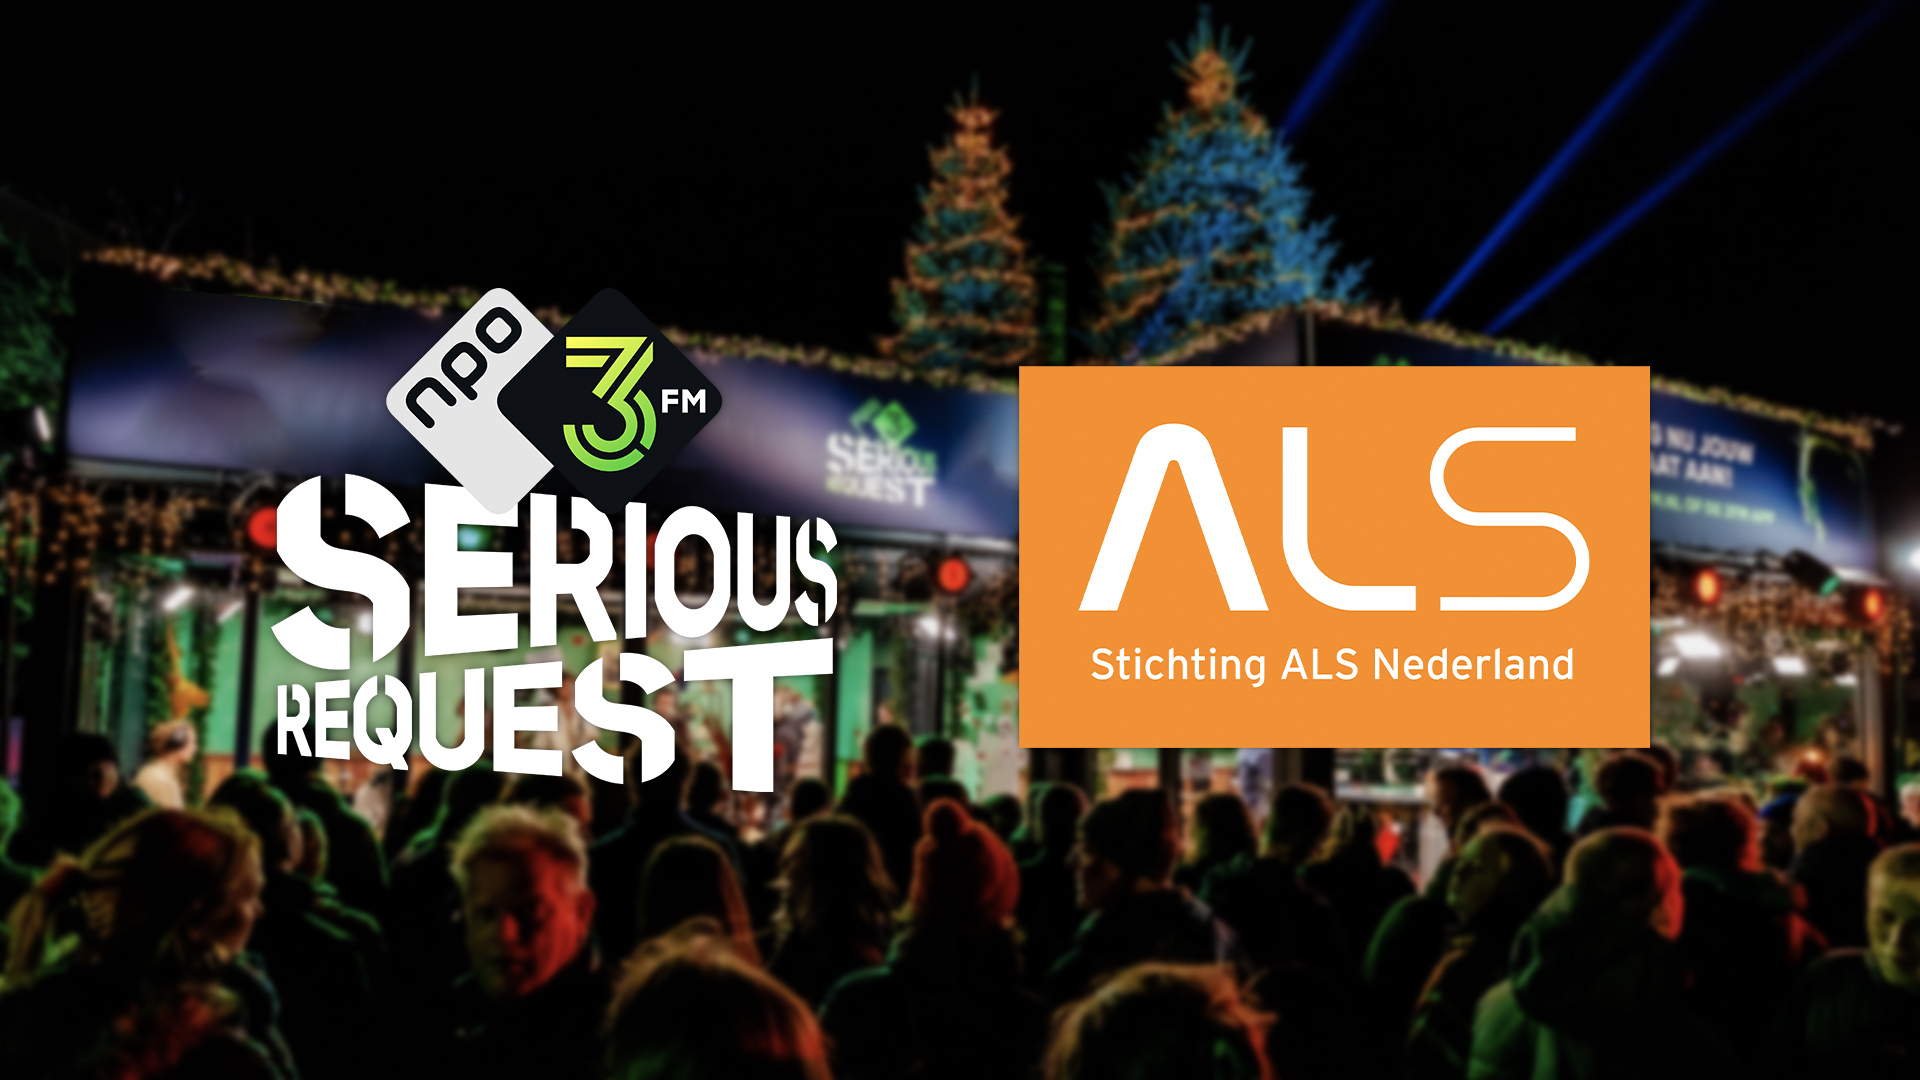 3FM Serious Request in actie voor Stichting ALS Nederland